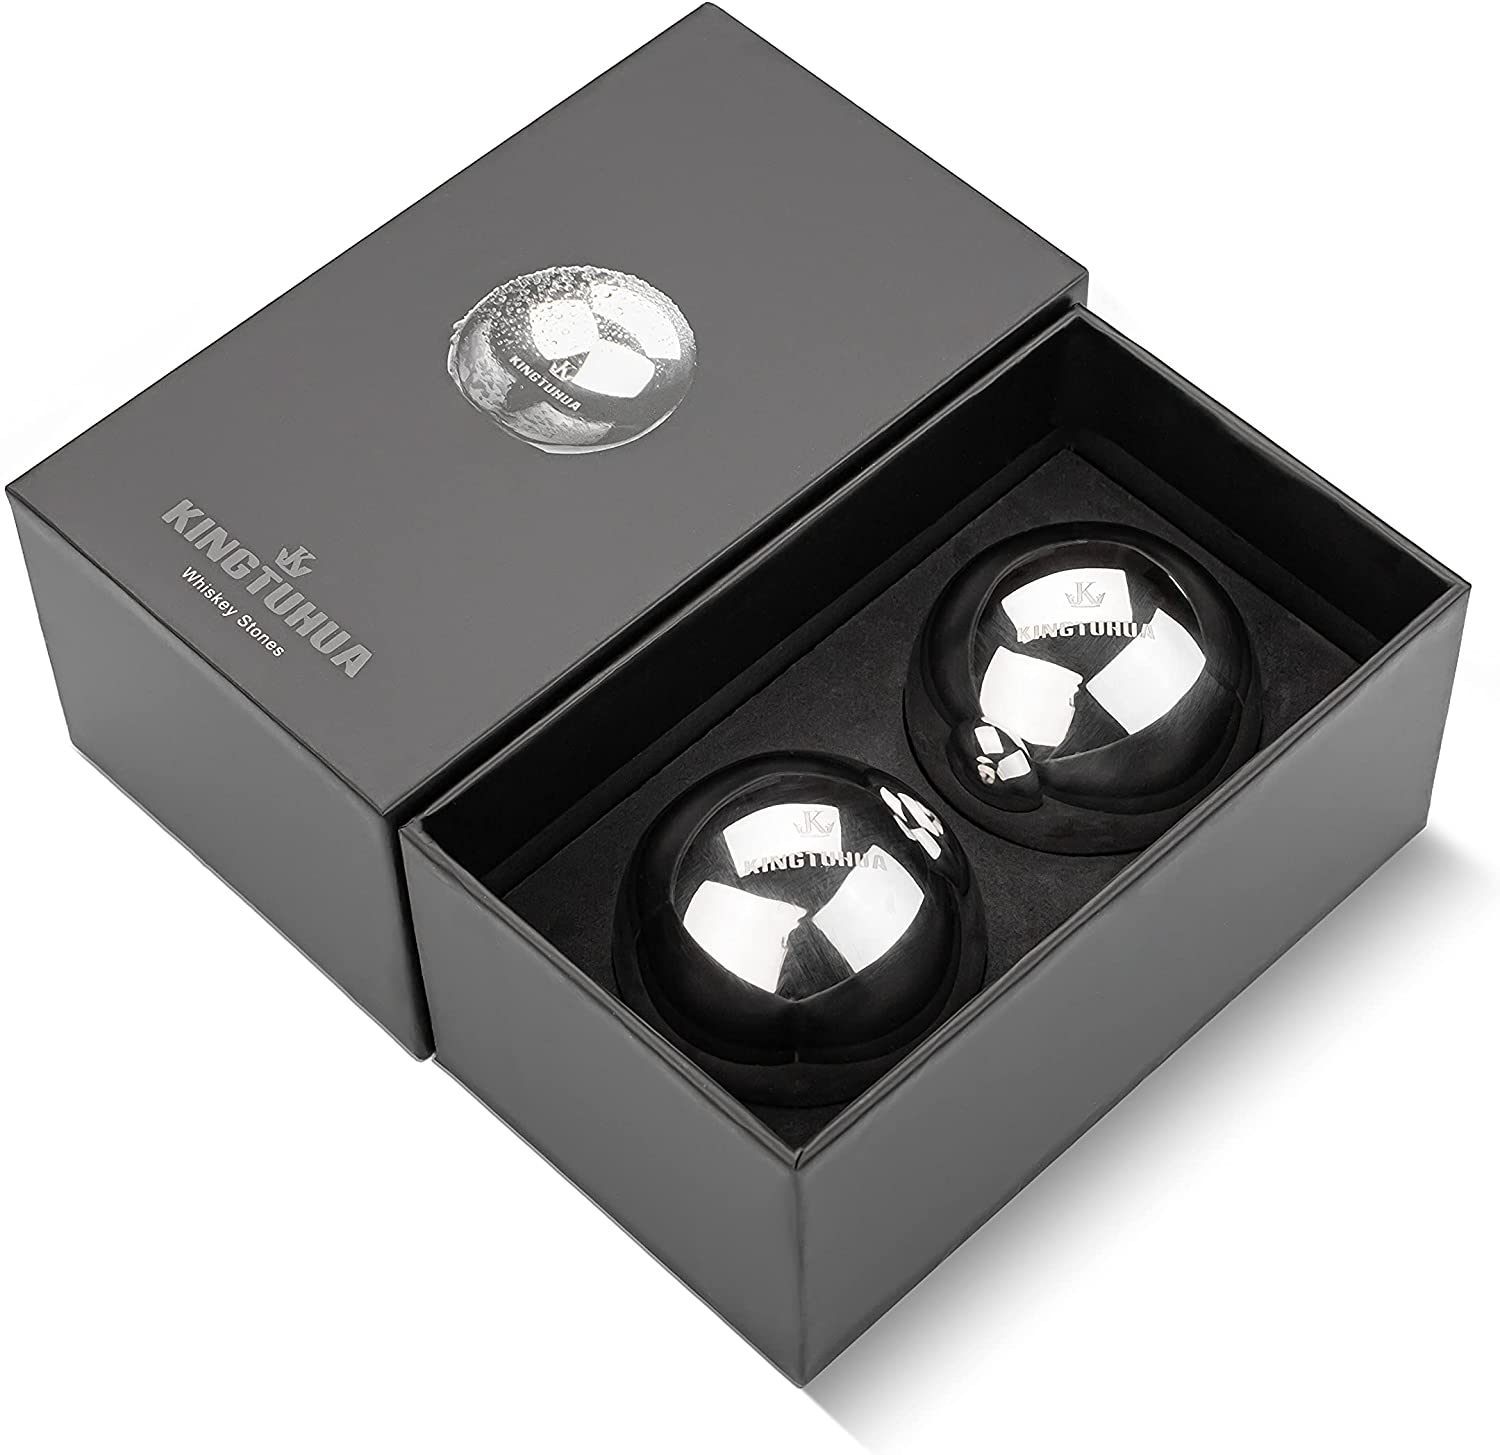 High definition Gray Marble Mosaic - Custom stainless steel Whiskey Stones Gift Set for Men Whisky Ice Balls in Luxury Box. – Shunstone